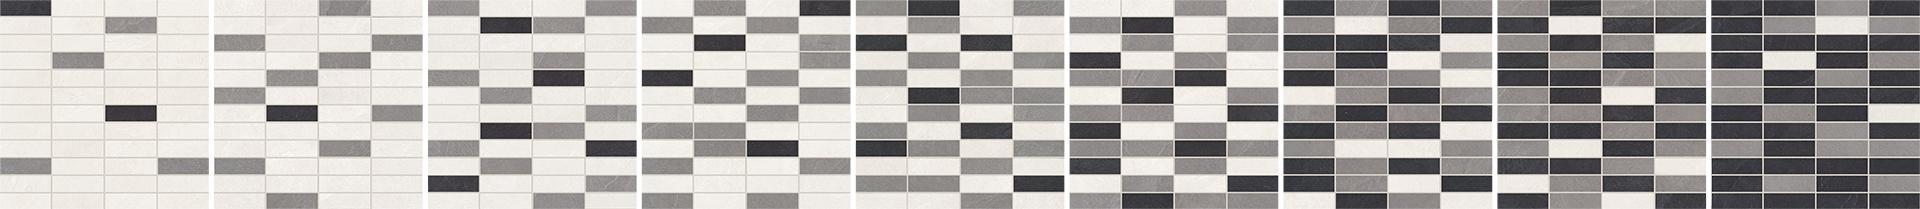 Cornerstone - SLATE WHITE / GREY / BLACK